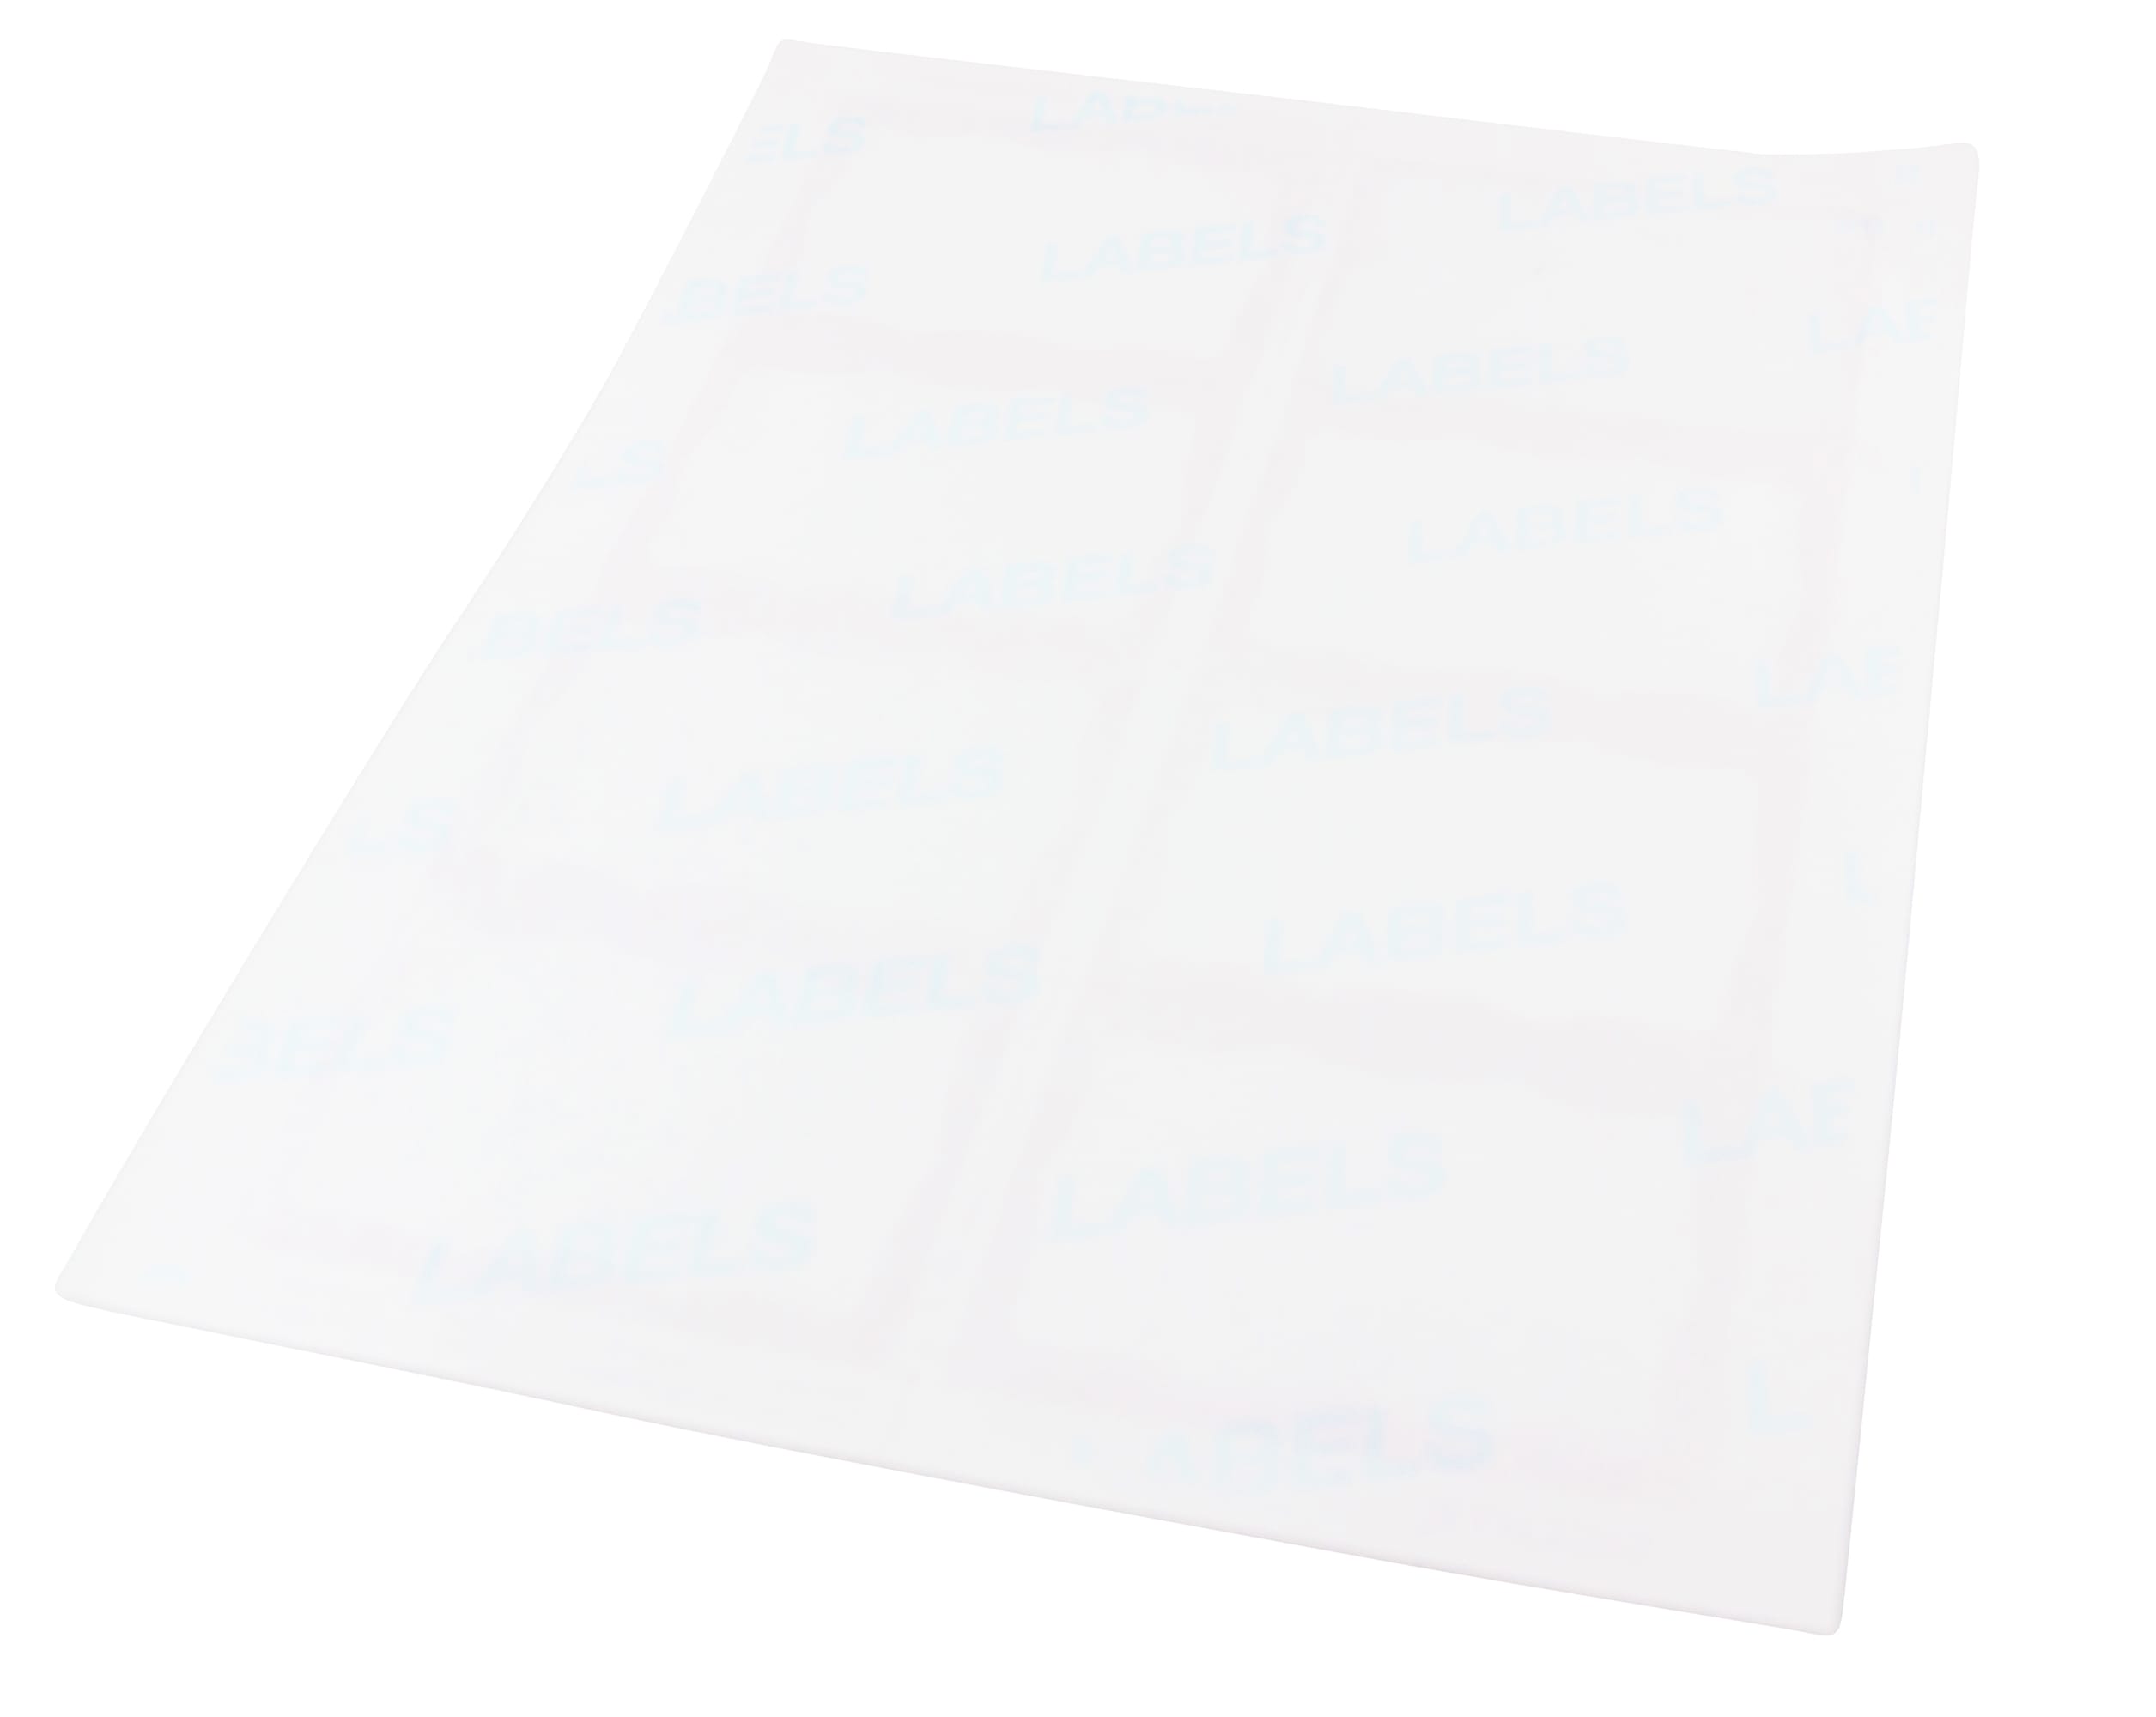 SICURIX RED Border Adhesive Badges 8 Per Sheet 200 Pack WHITE (67652)